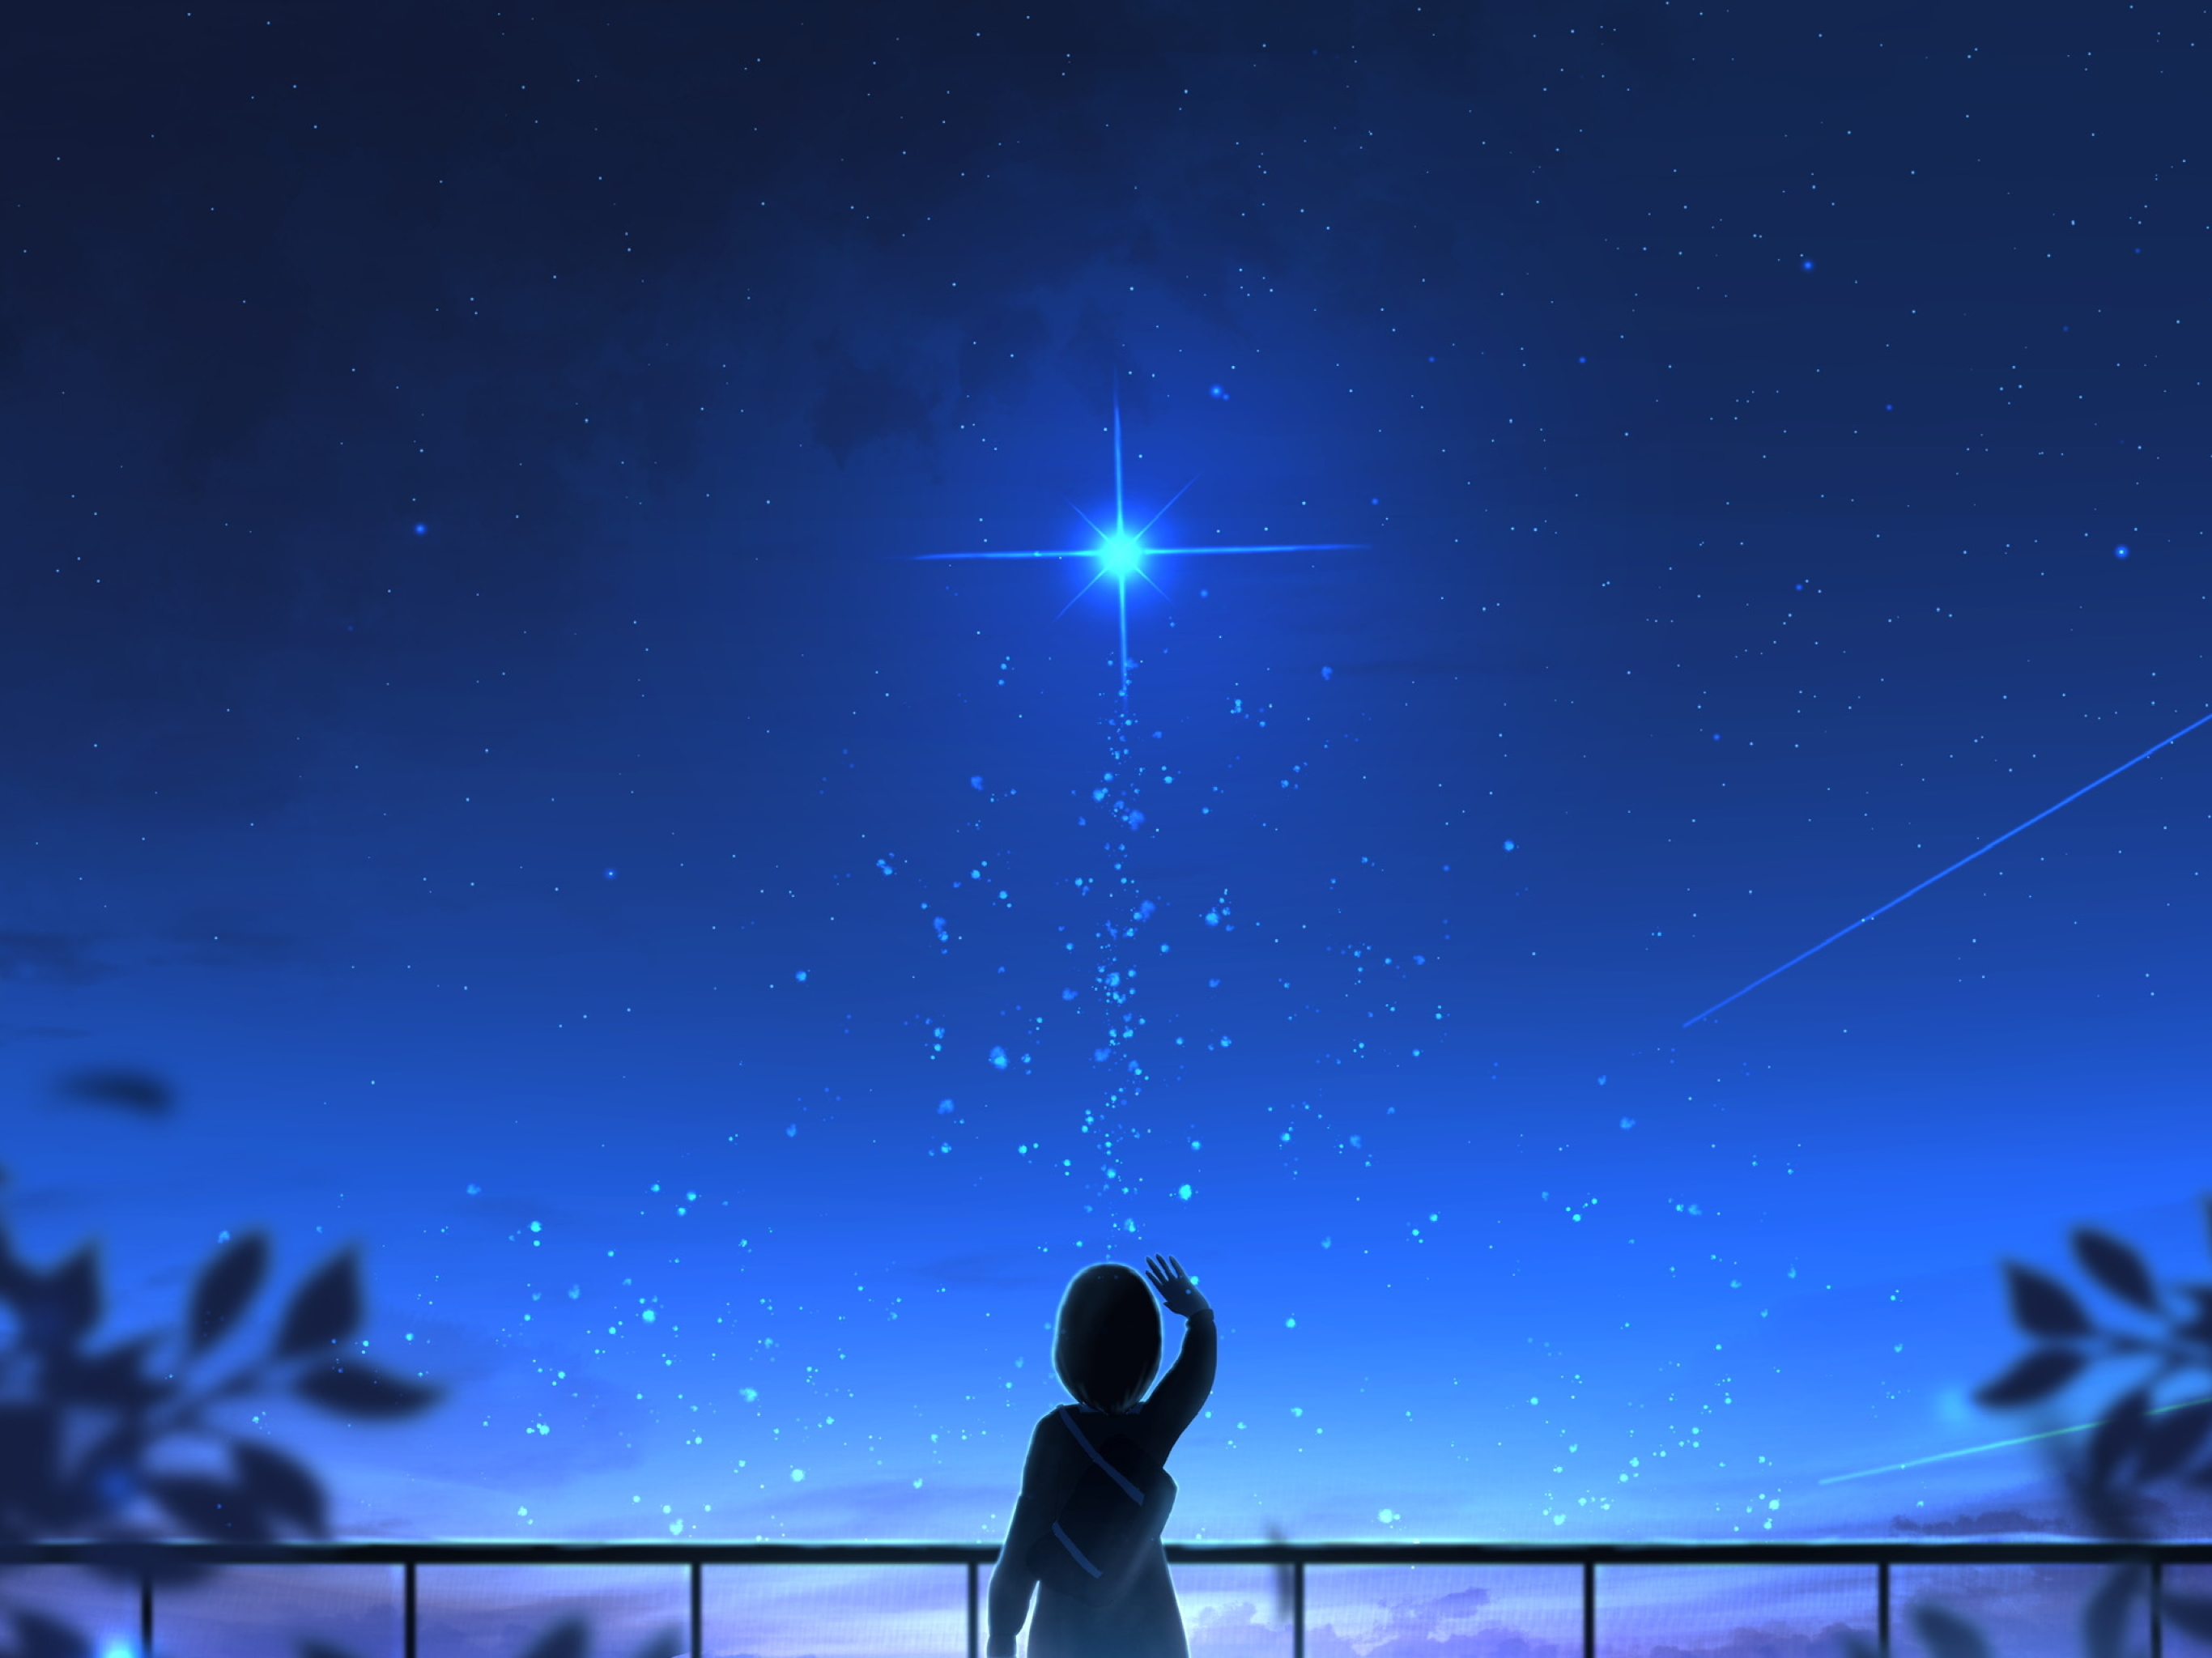 Путь среди звезд. Девушка на фоне звездного неба. Человек на фоне звездного неба.